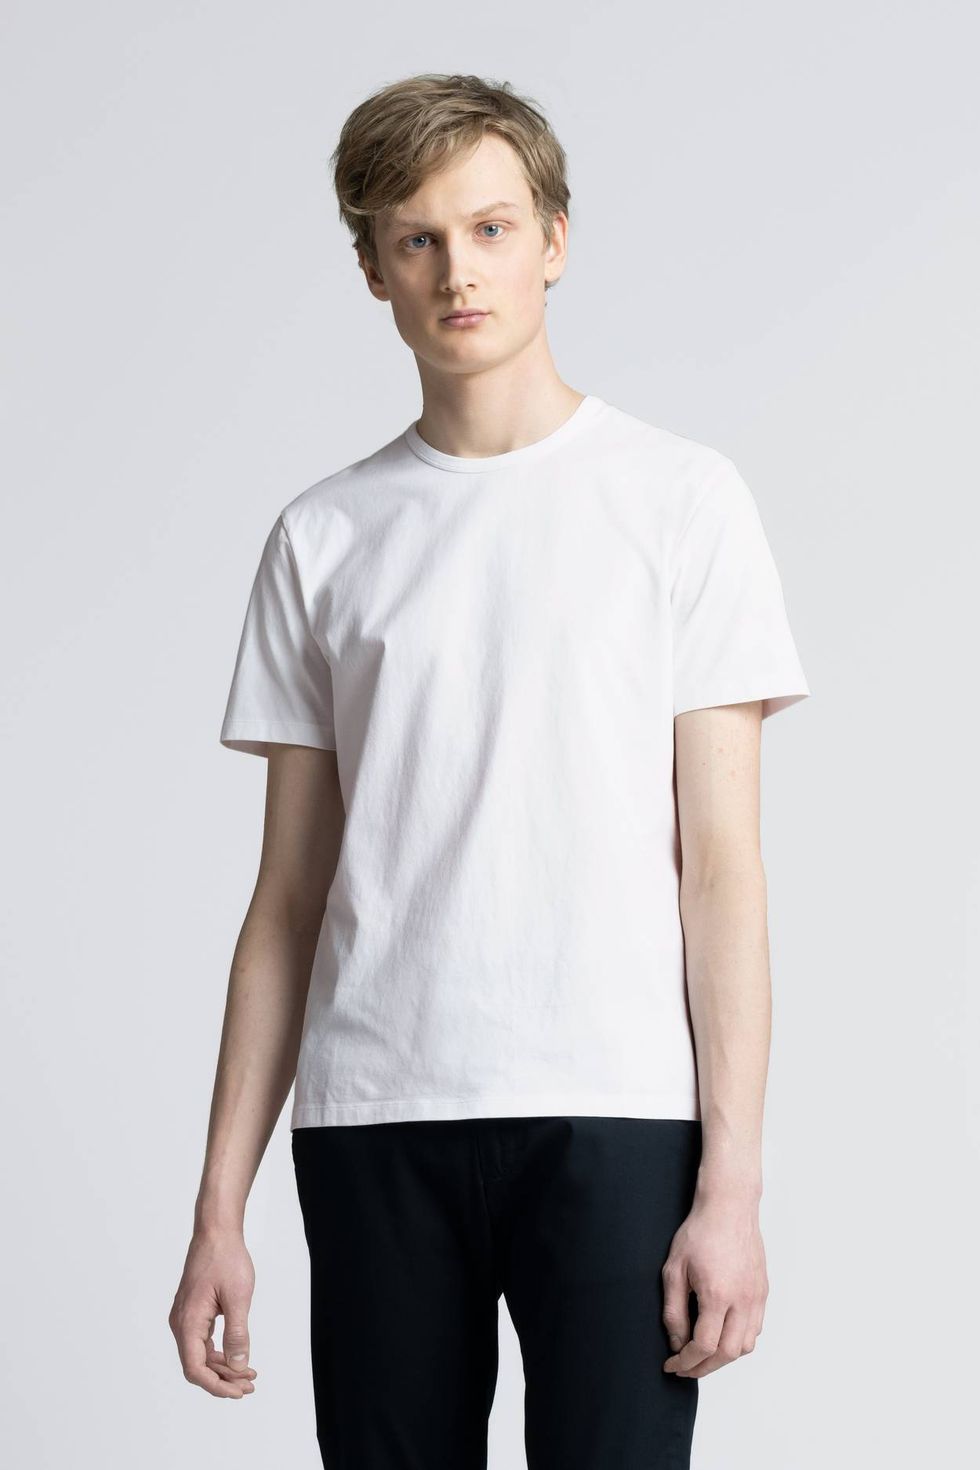 Re-Defining Split T Shirts - Agora Clothing Blog